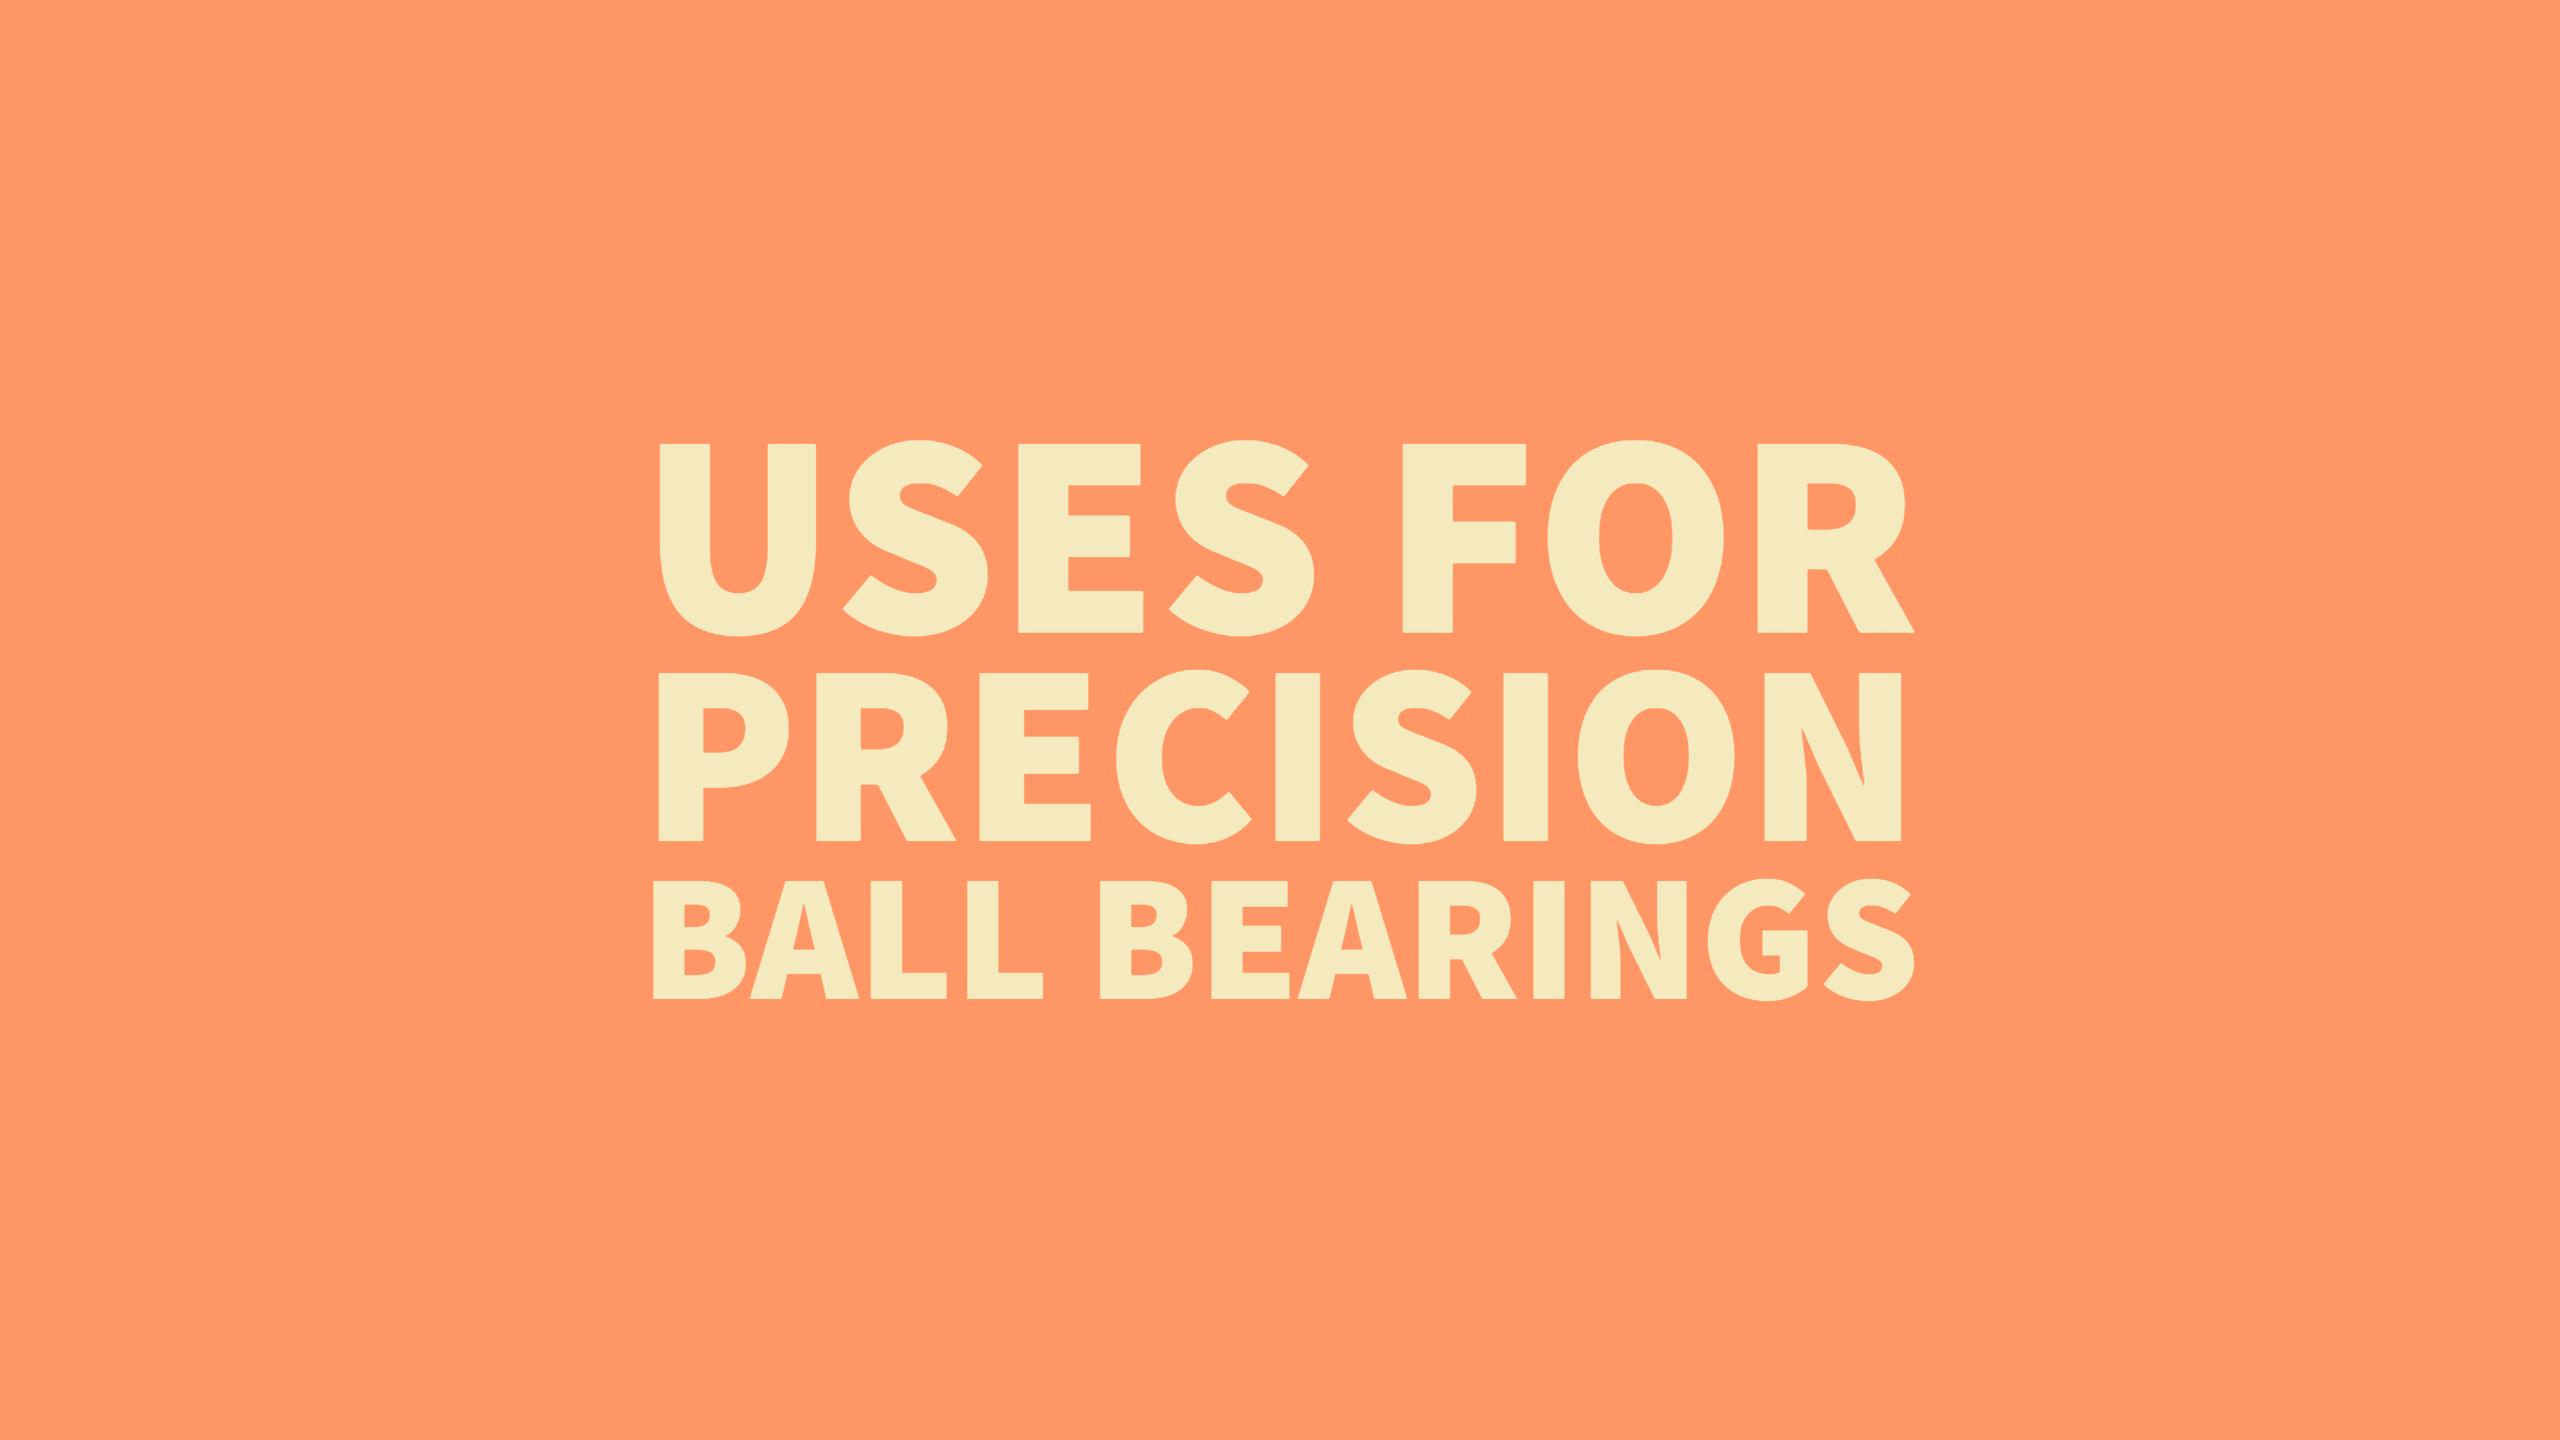 Uses for precision ball bearings